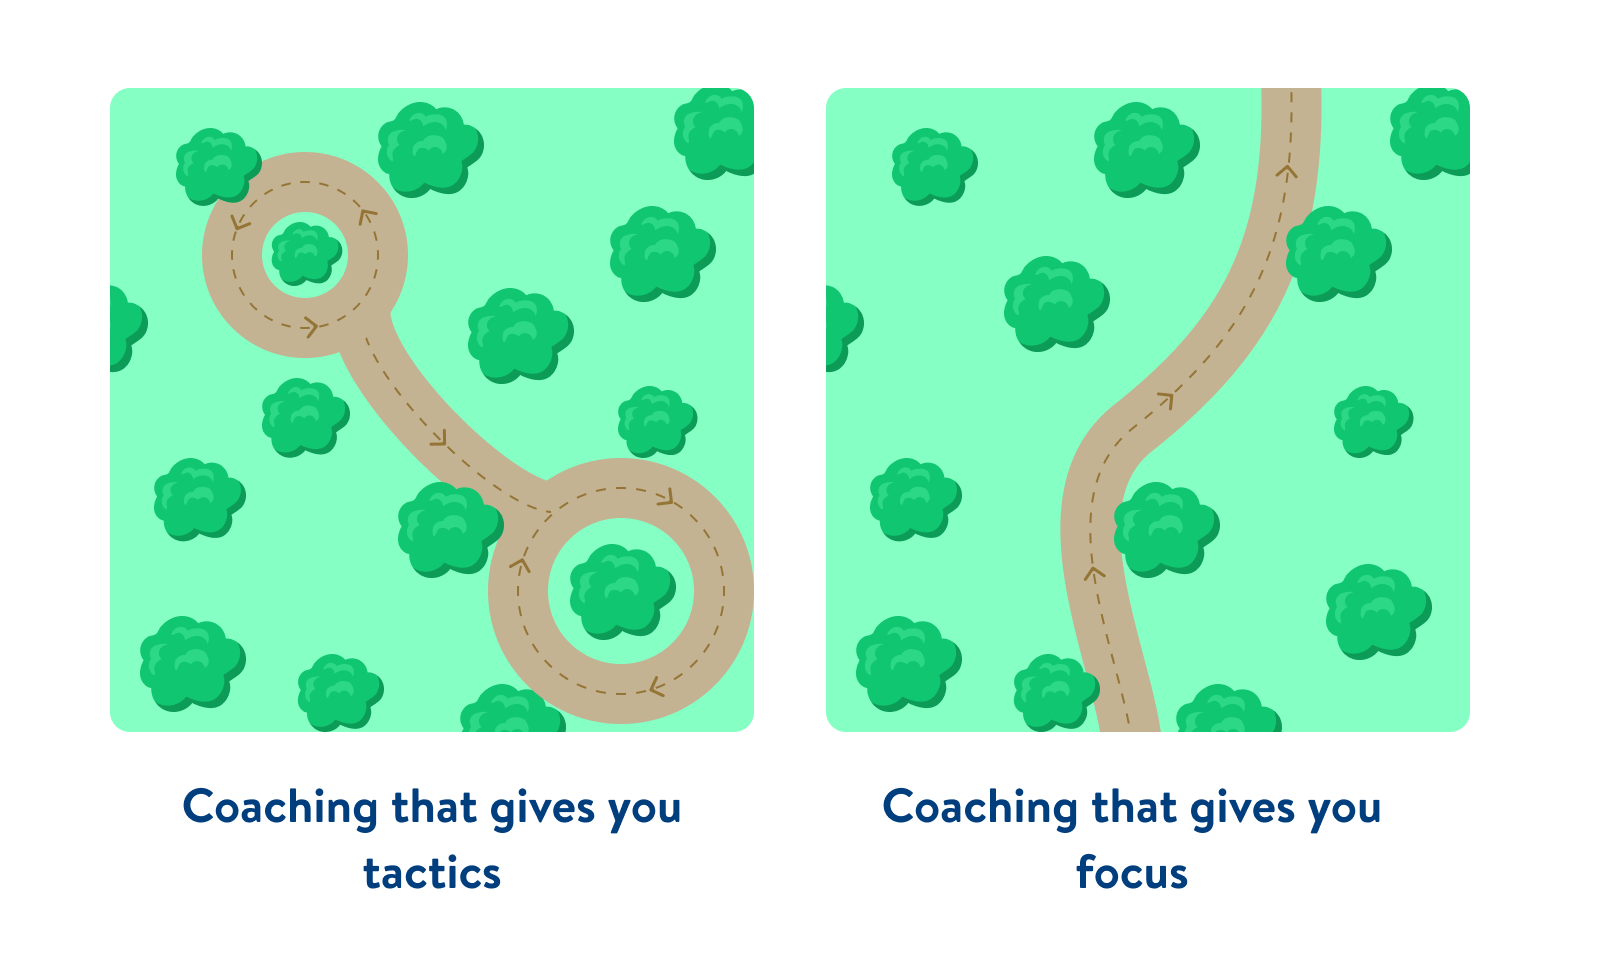 Coaching that gives you tactics vs Coaching that gives you focus